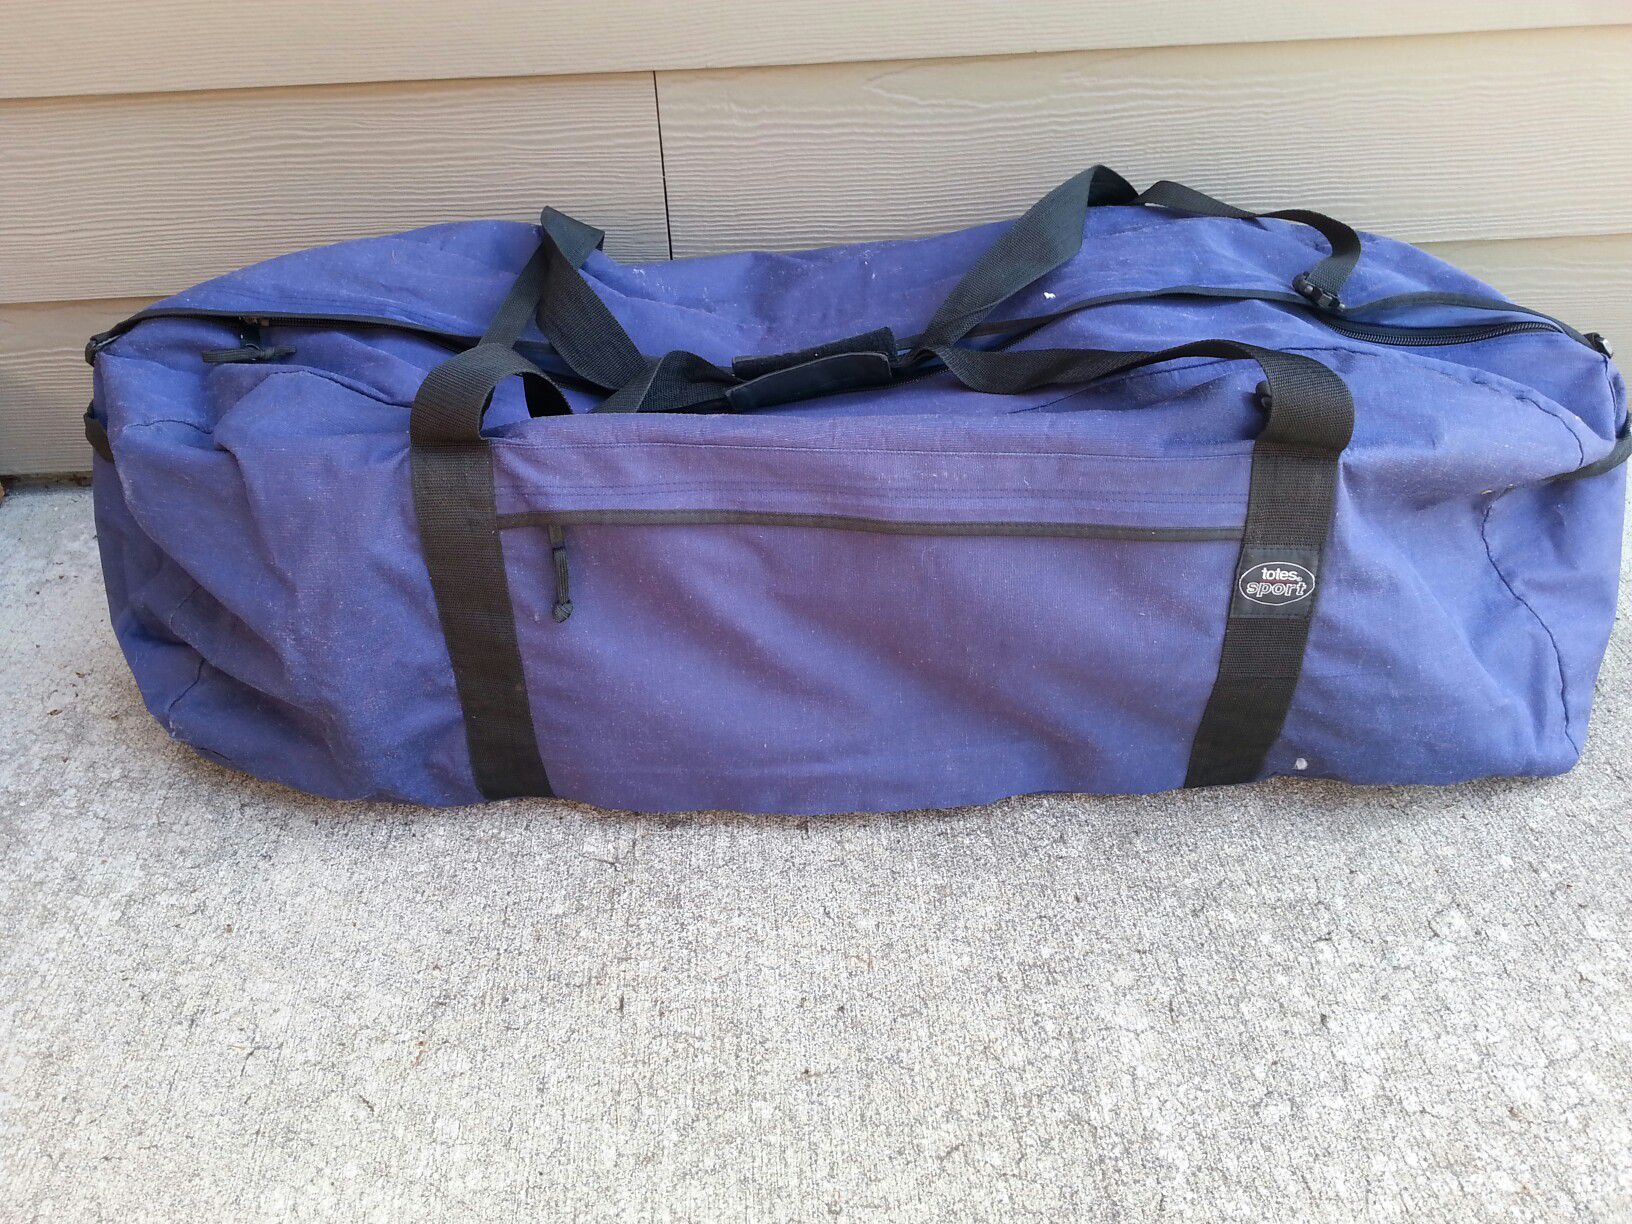 Large duffel bag large heavy duty duffle bag great for traveling heavy duty zipper nice carrying handle